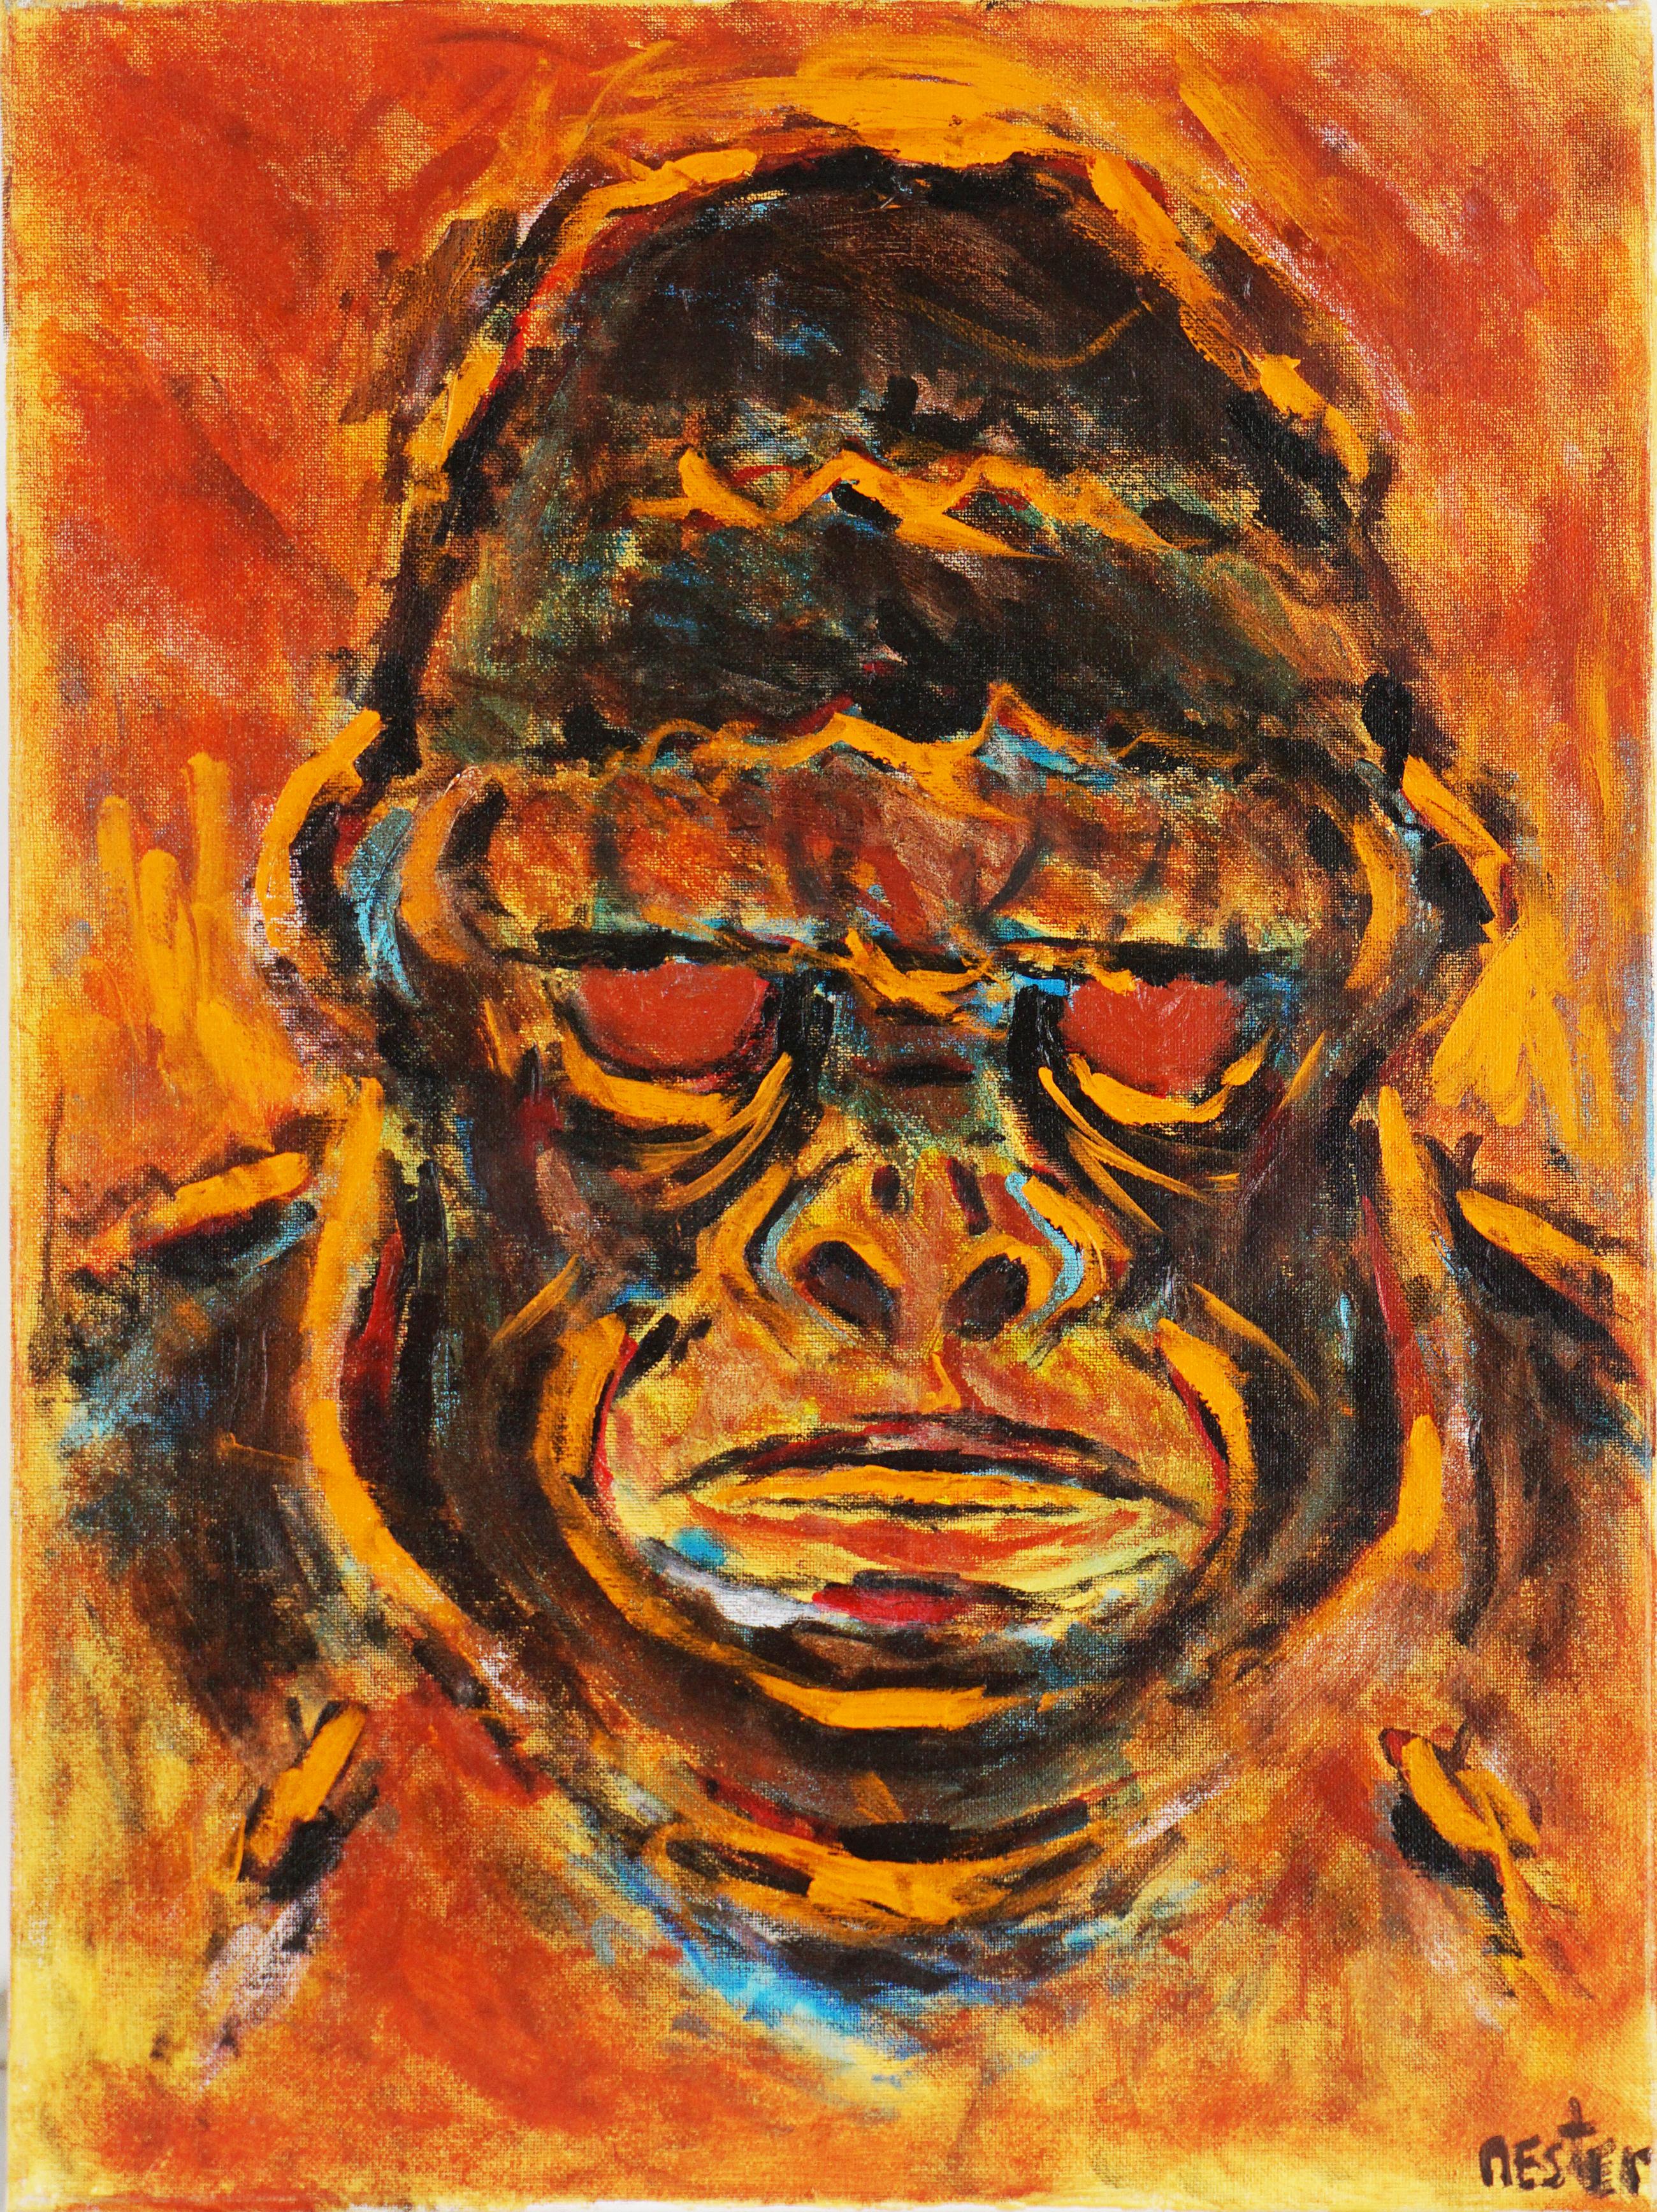 Gorilla expressionniste abstraite fauviste et expressionniste du Lowland